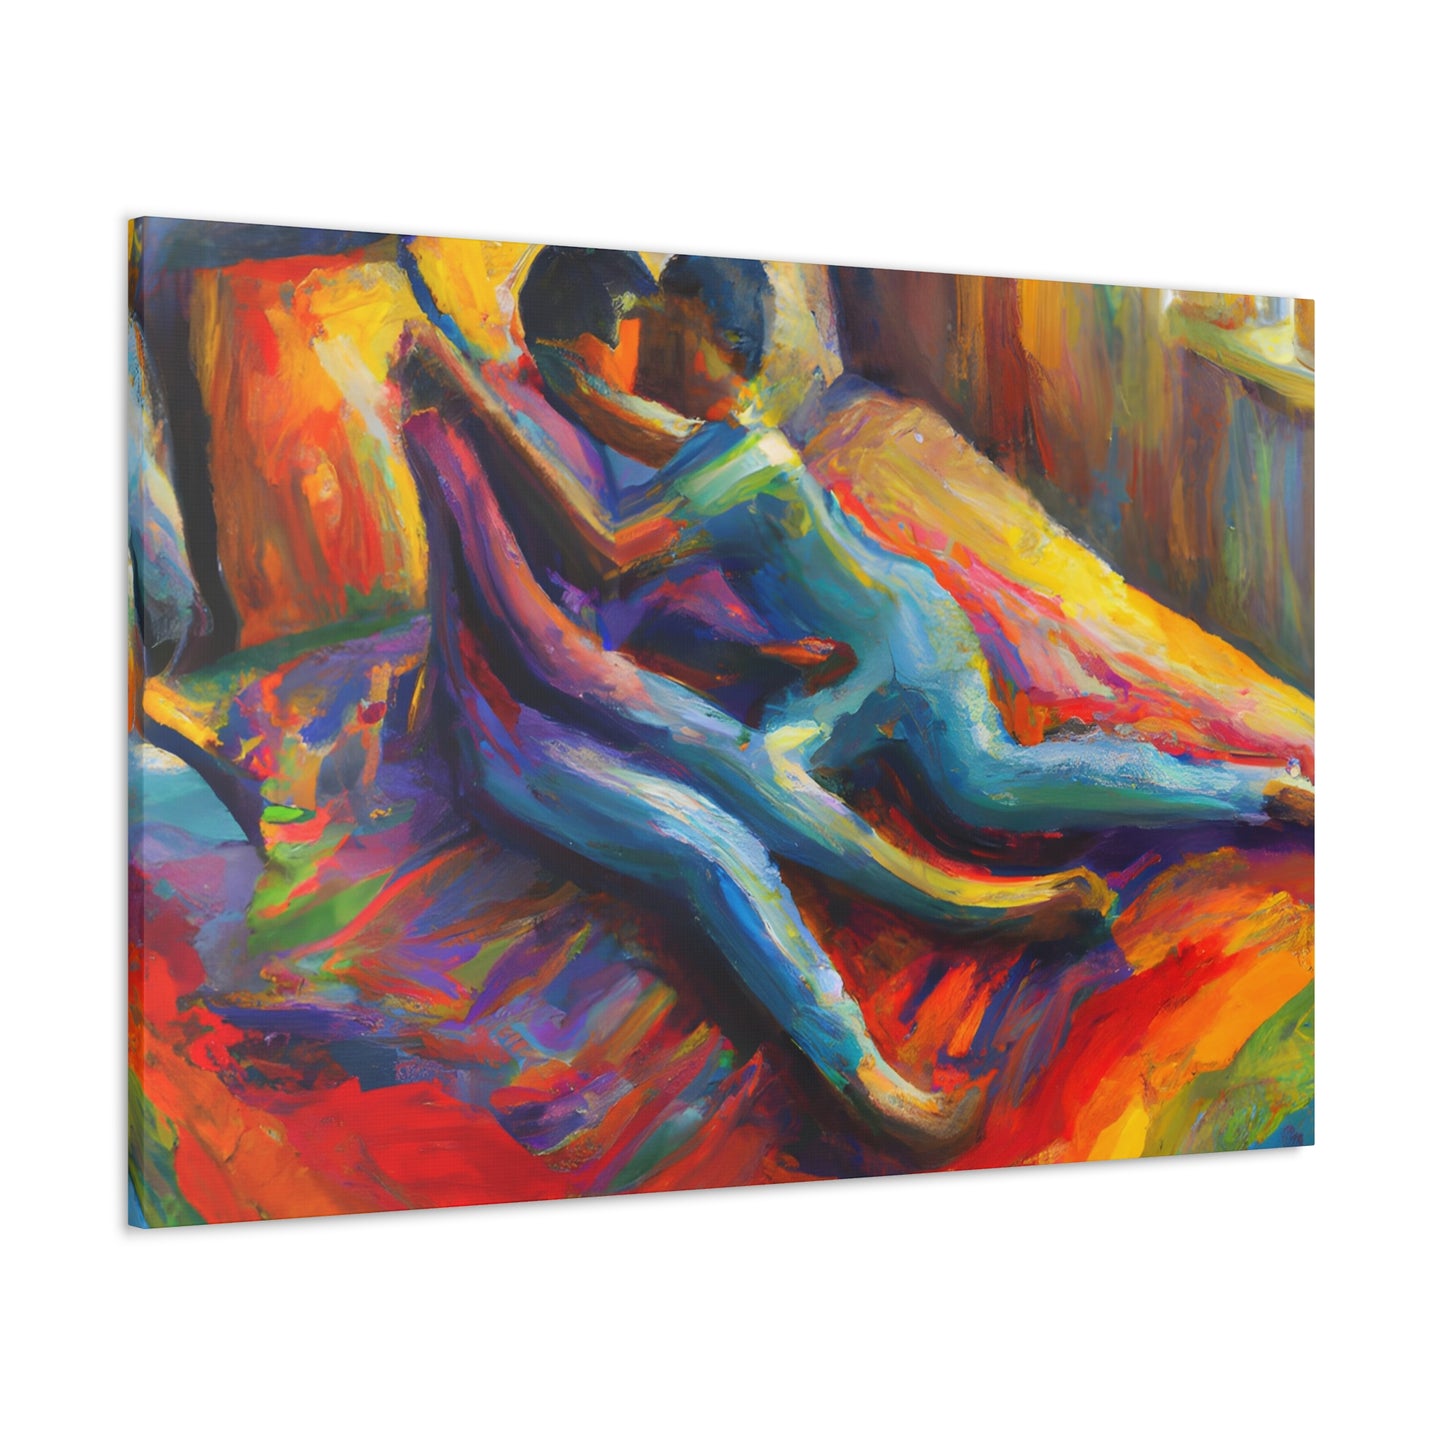 Kace - Gay Love Canvas Art